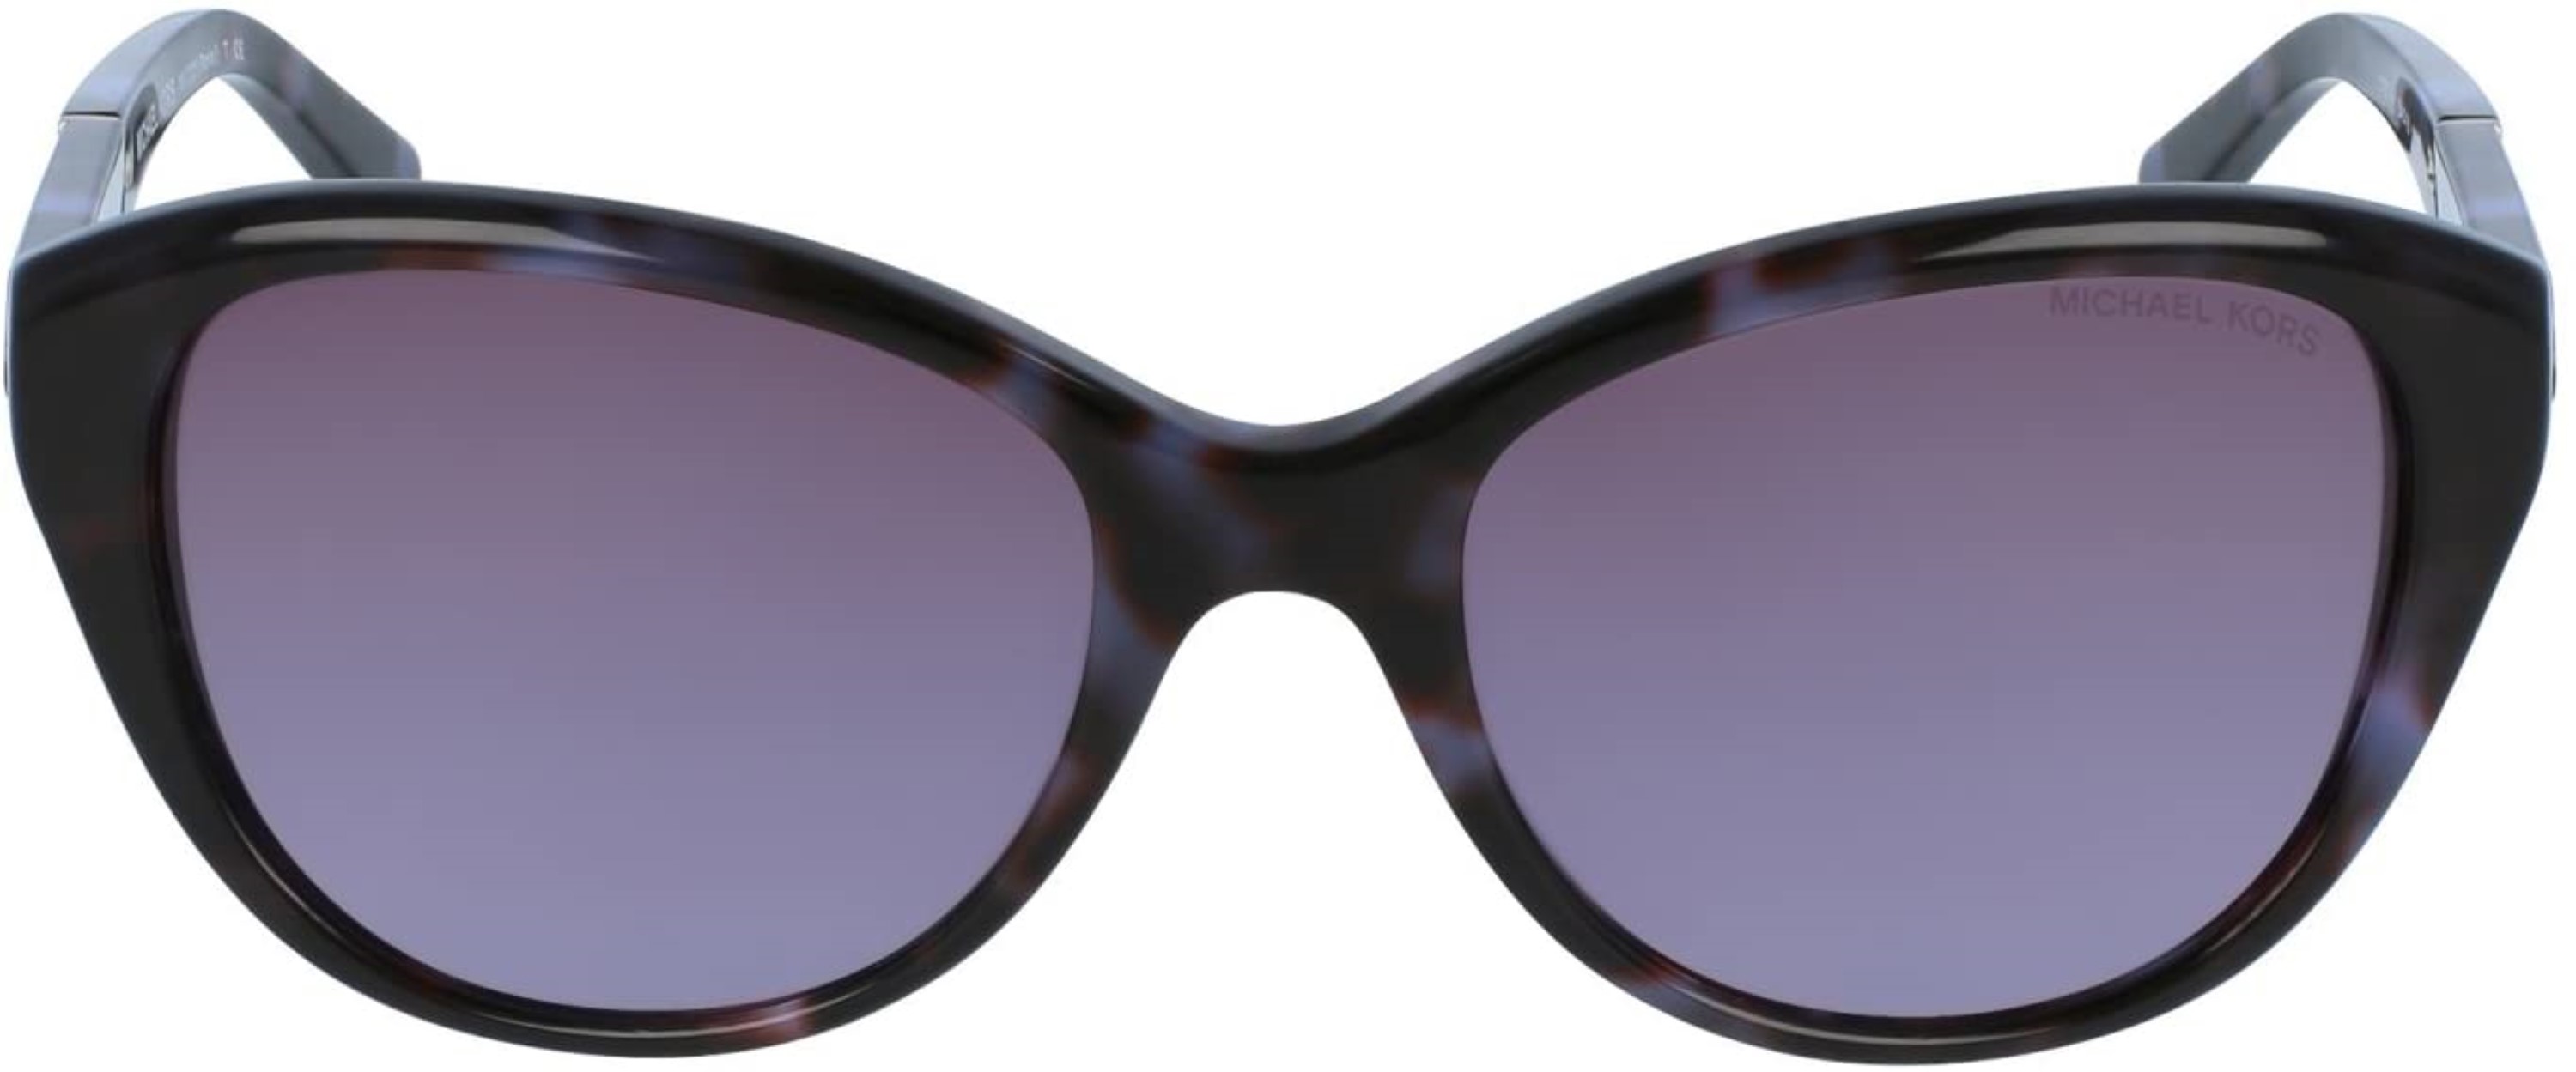 Sunglasses Michael Kors Purple in Plastic  29238593